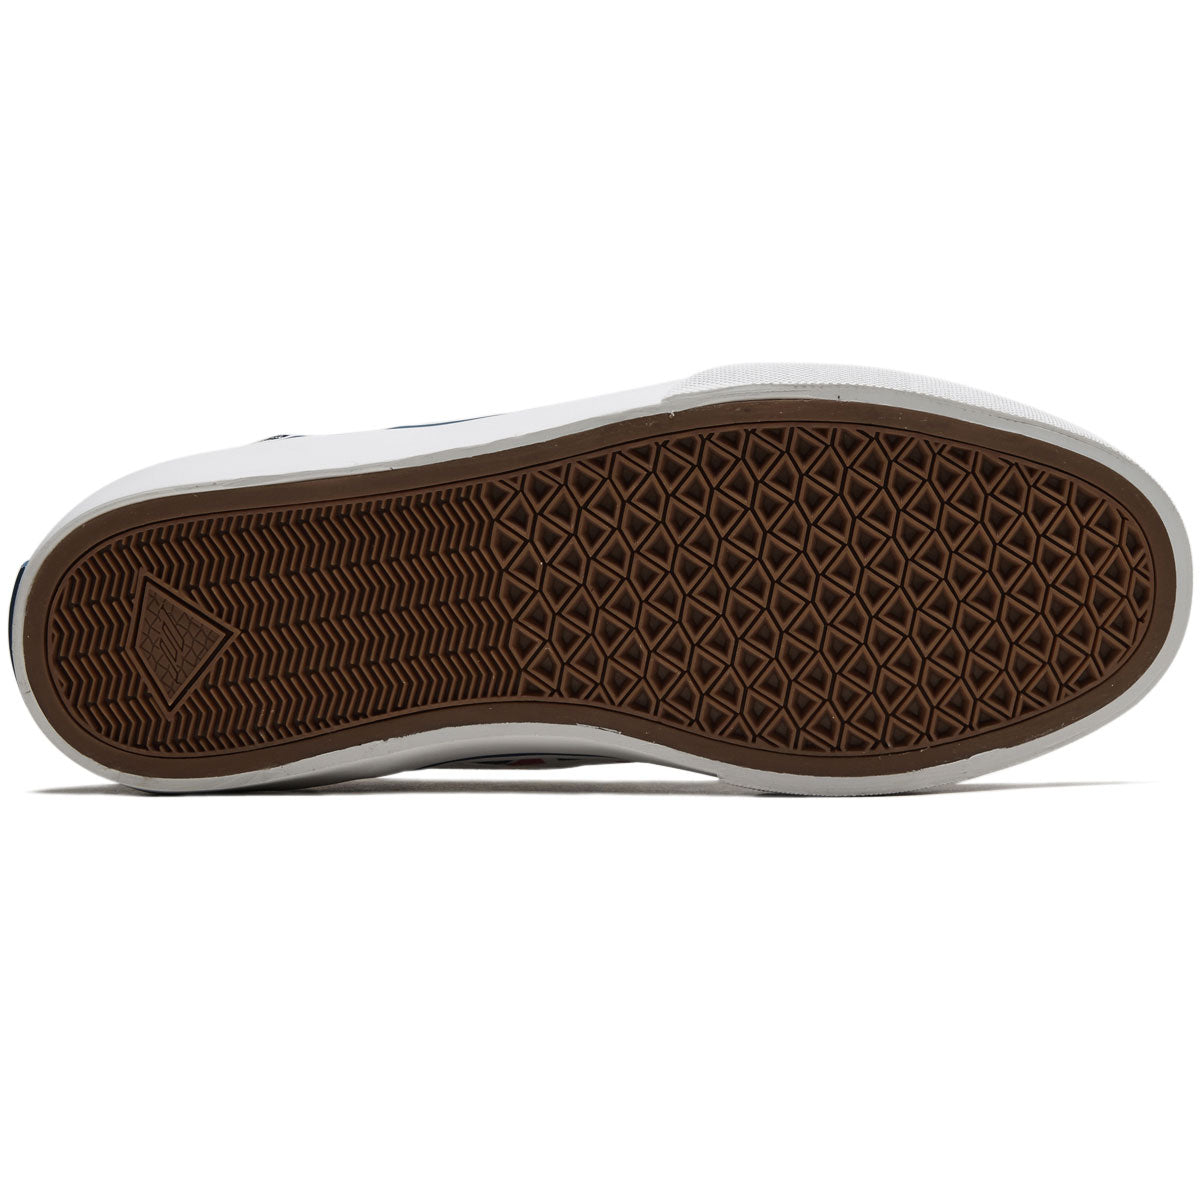 Emerica x Michael Sieben Wino G6 Slip-on Shoes - Natural image 4